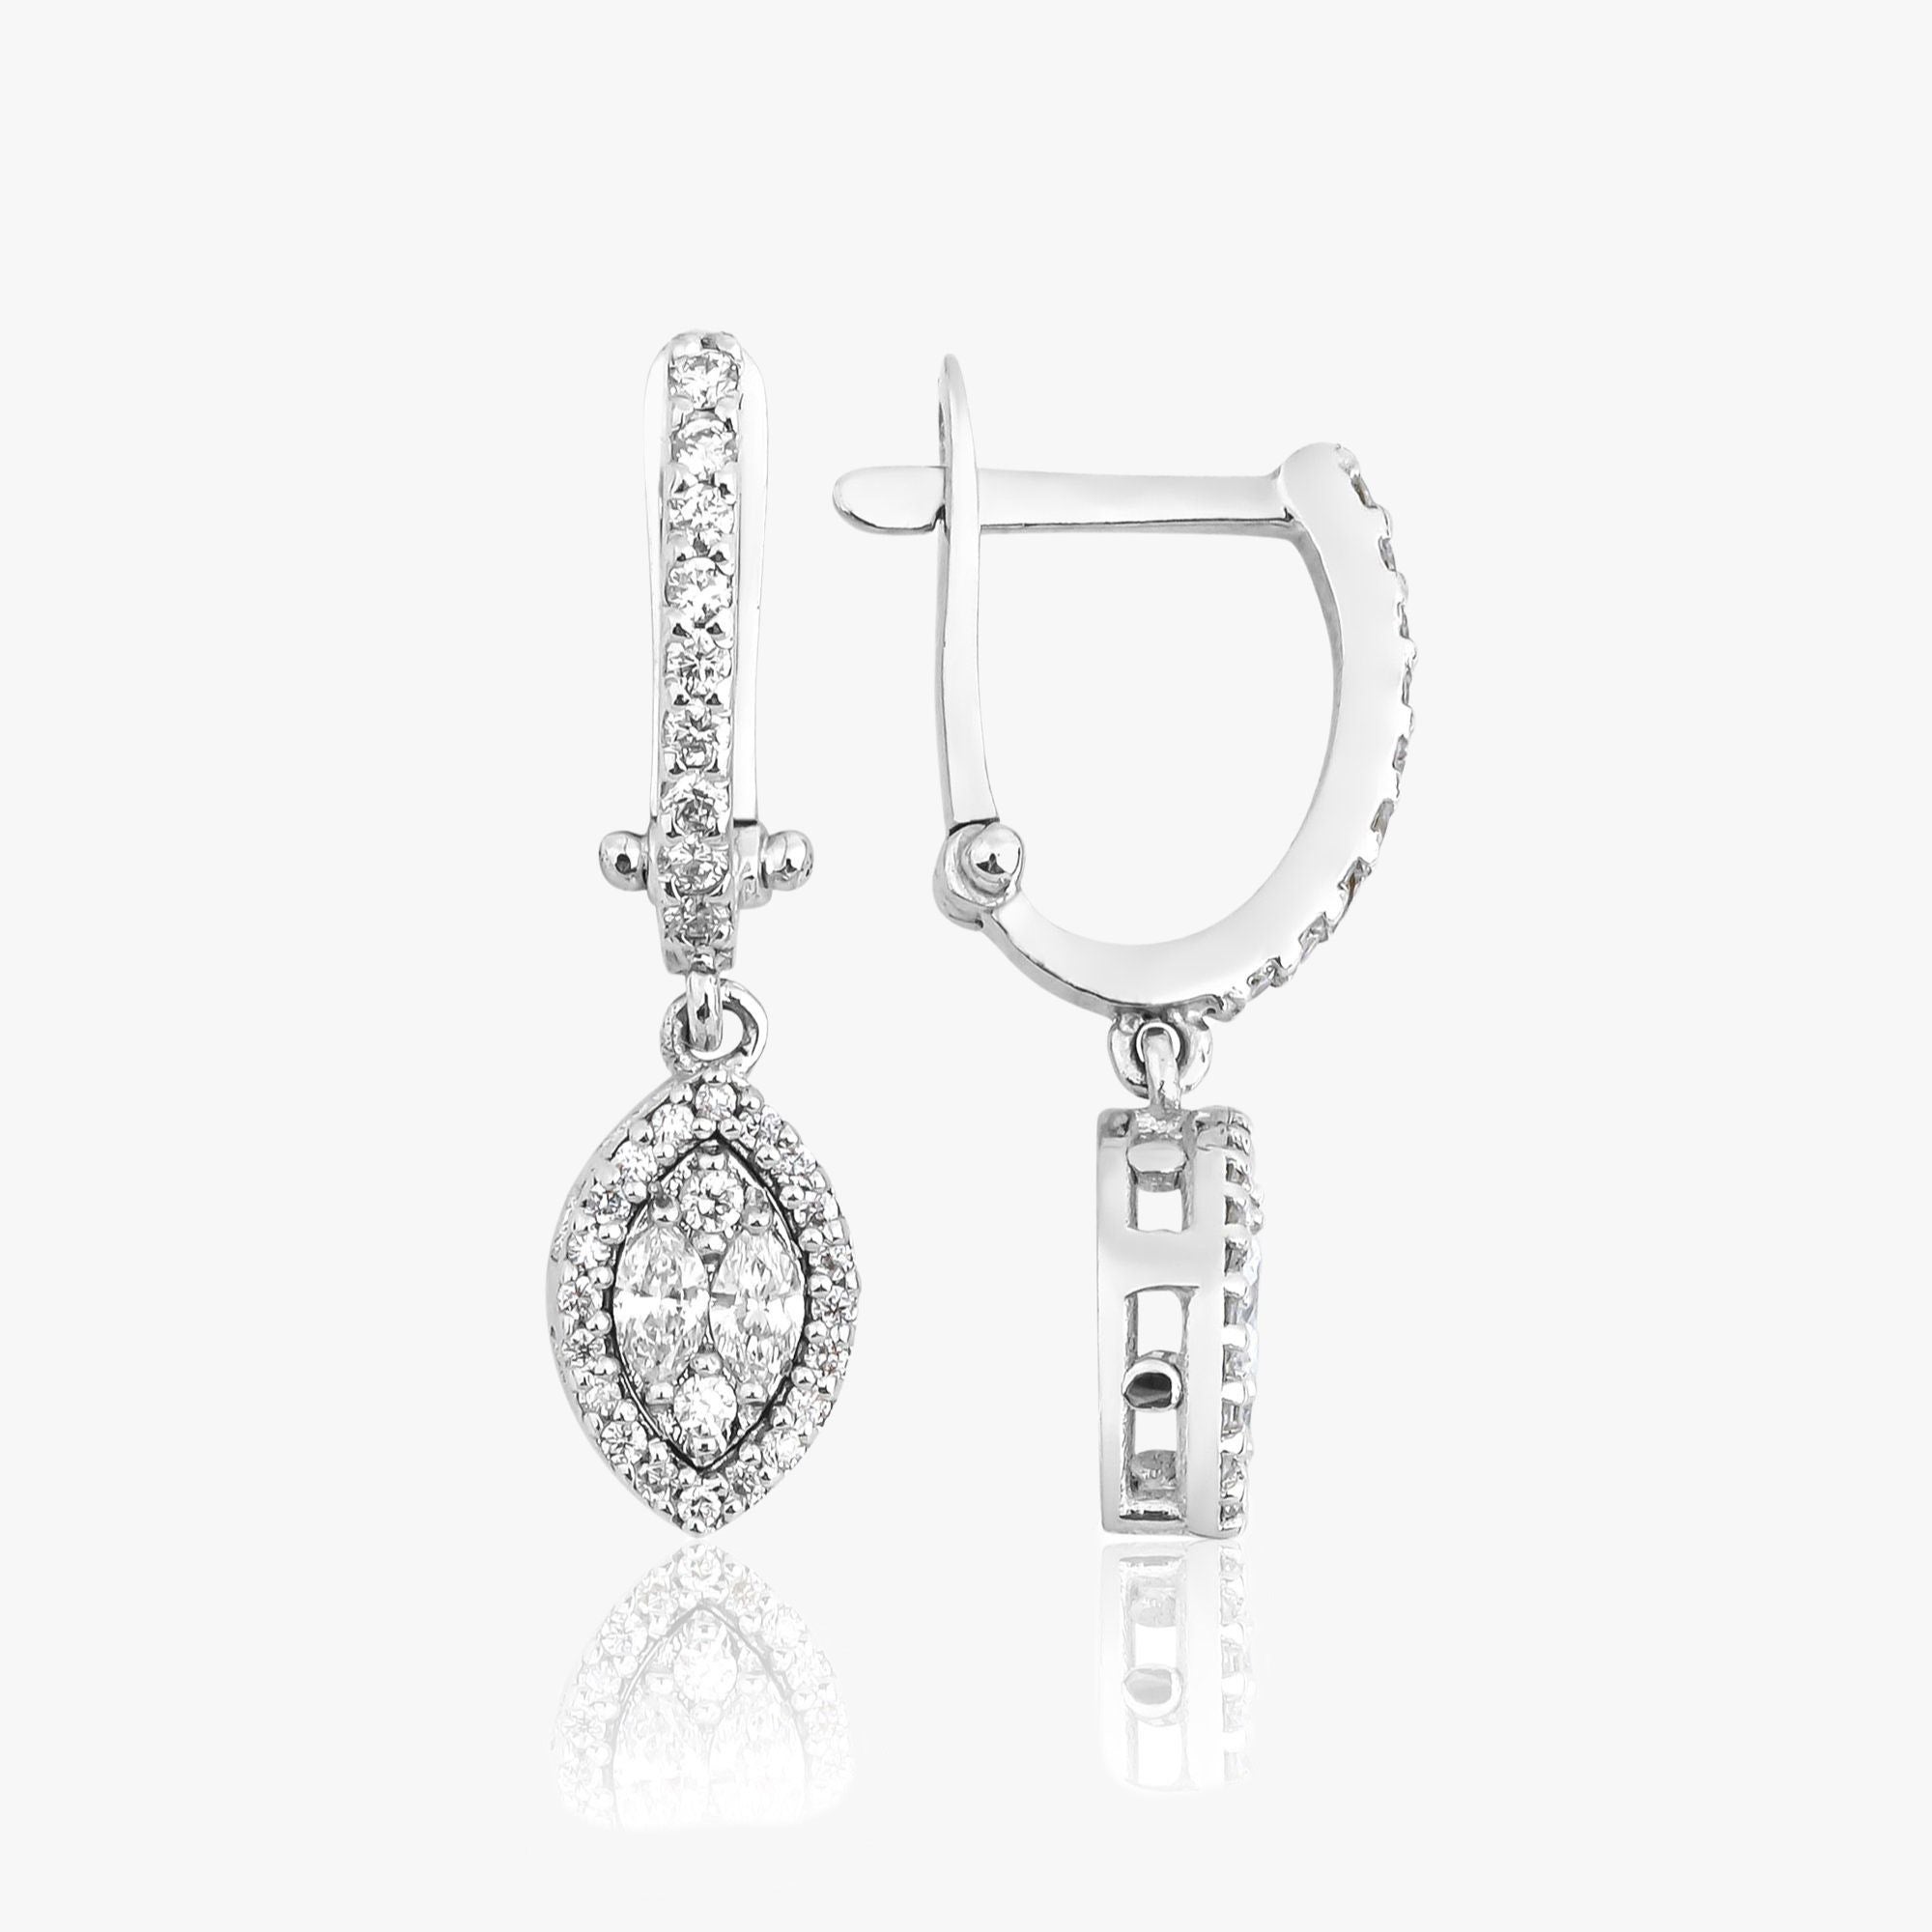 Marquise Cut Diamond Dangle Earrings in 14K White Gold